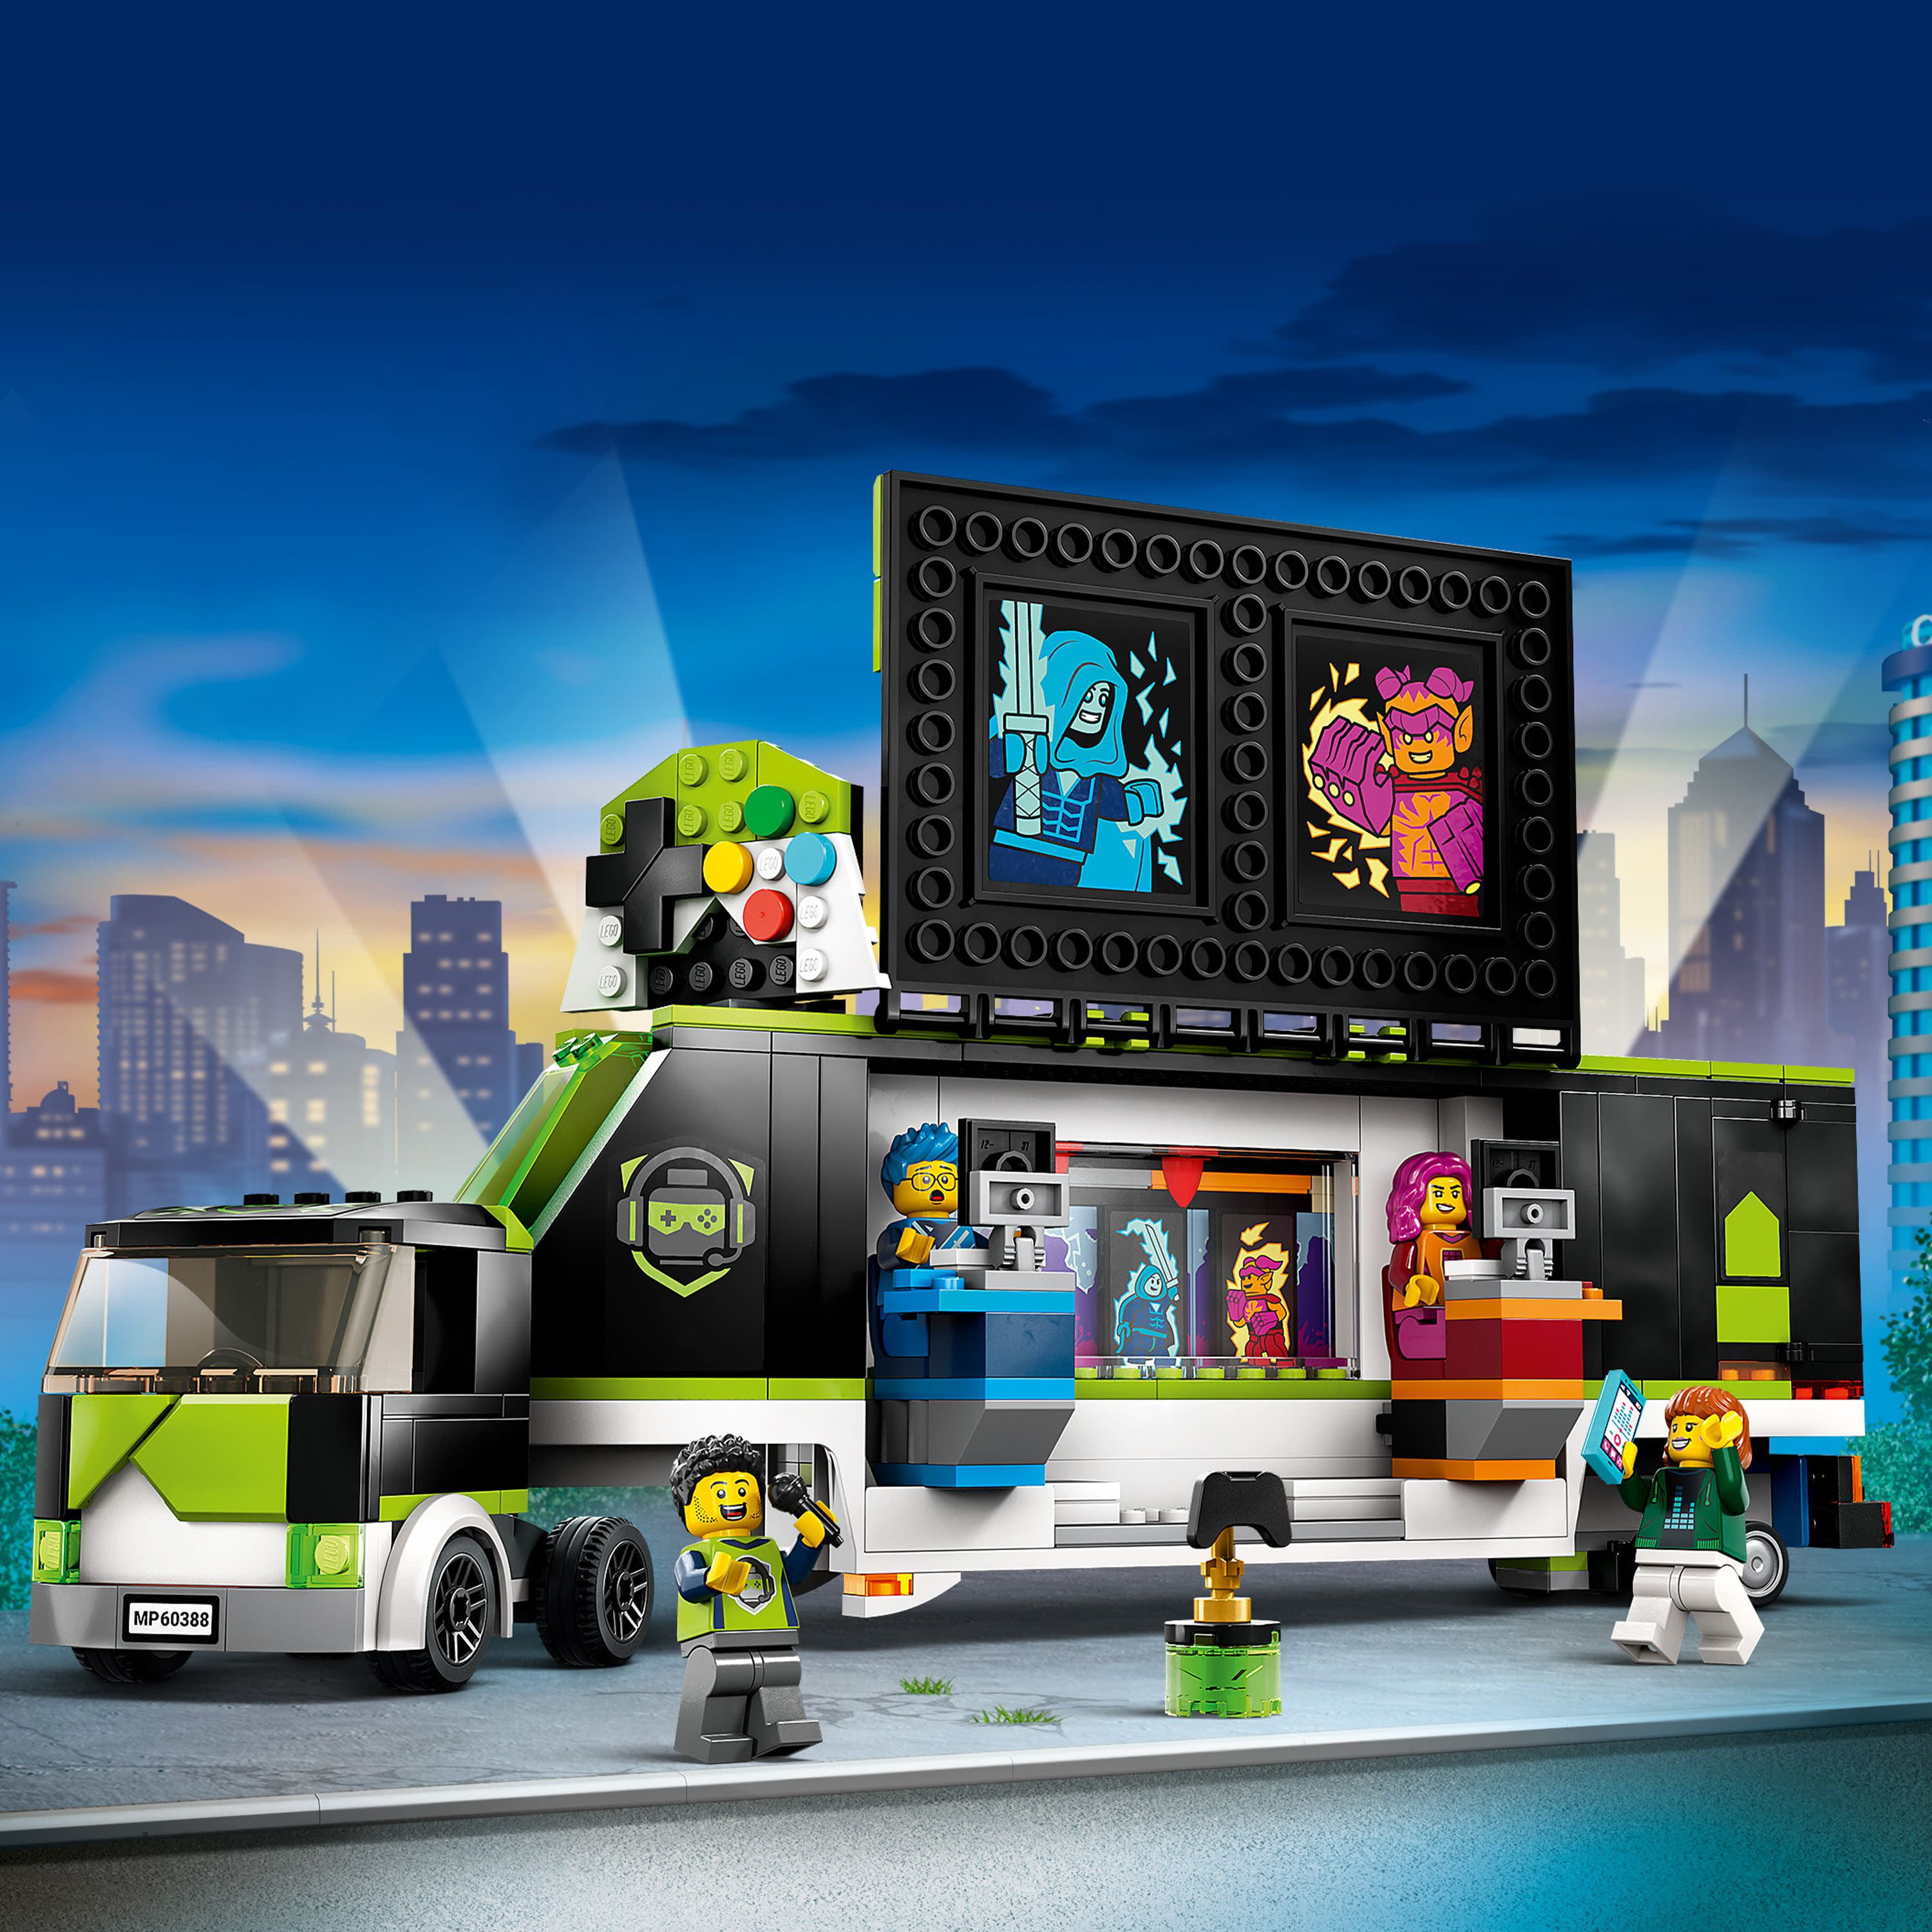 🕹️ Play Free Online LEGO Games: HTML5 LEGO Arcade Video Games